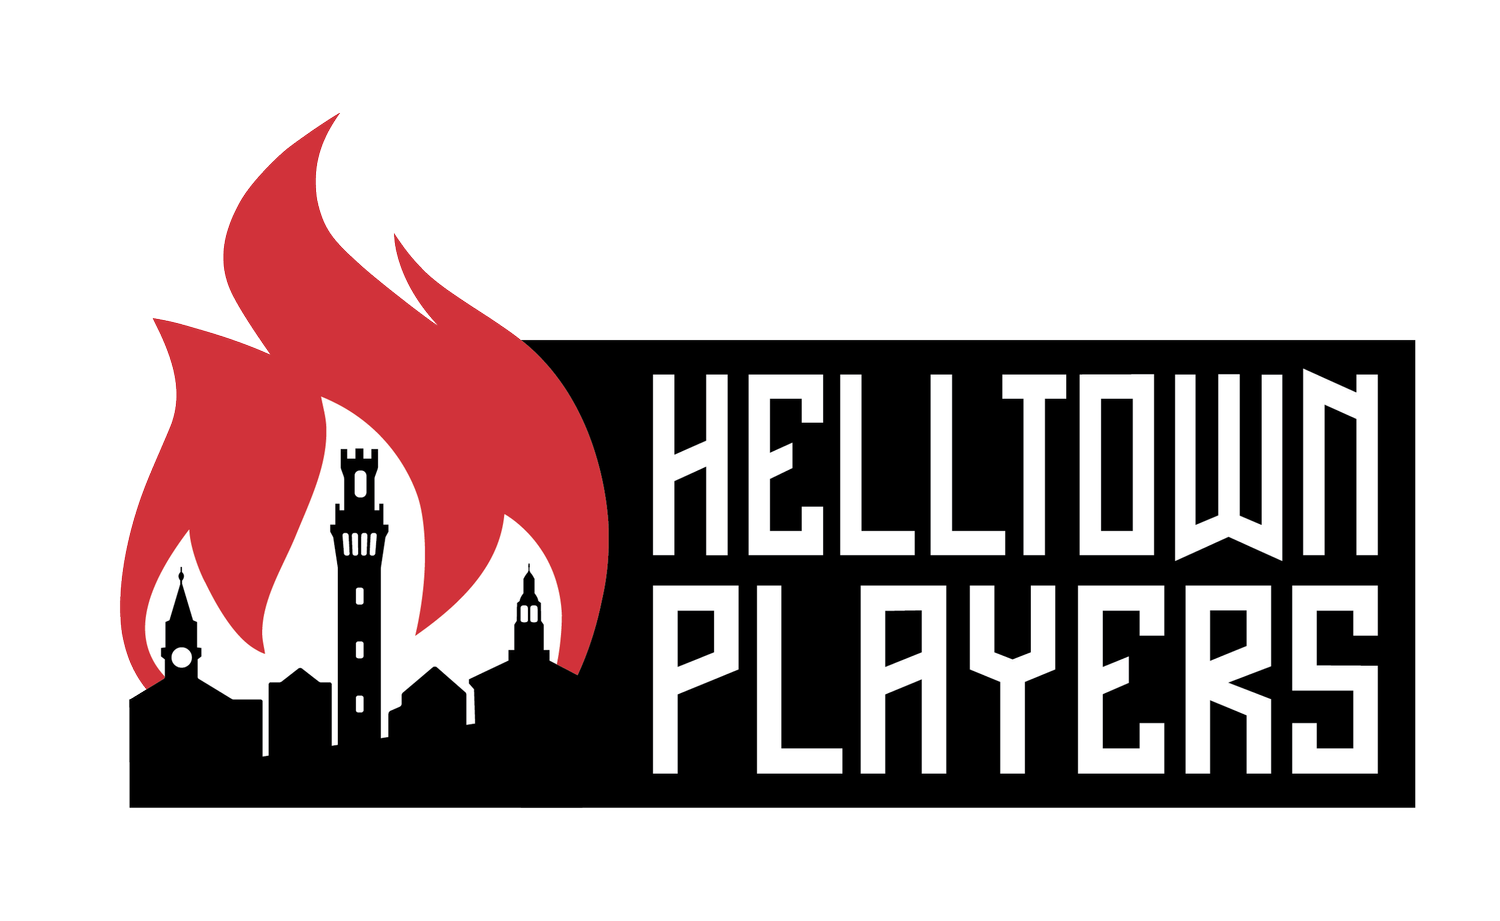 Helltown Players